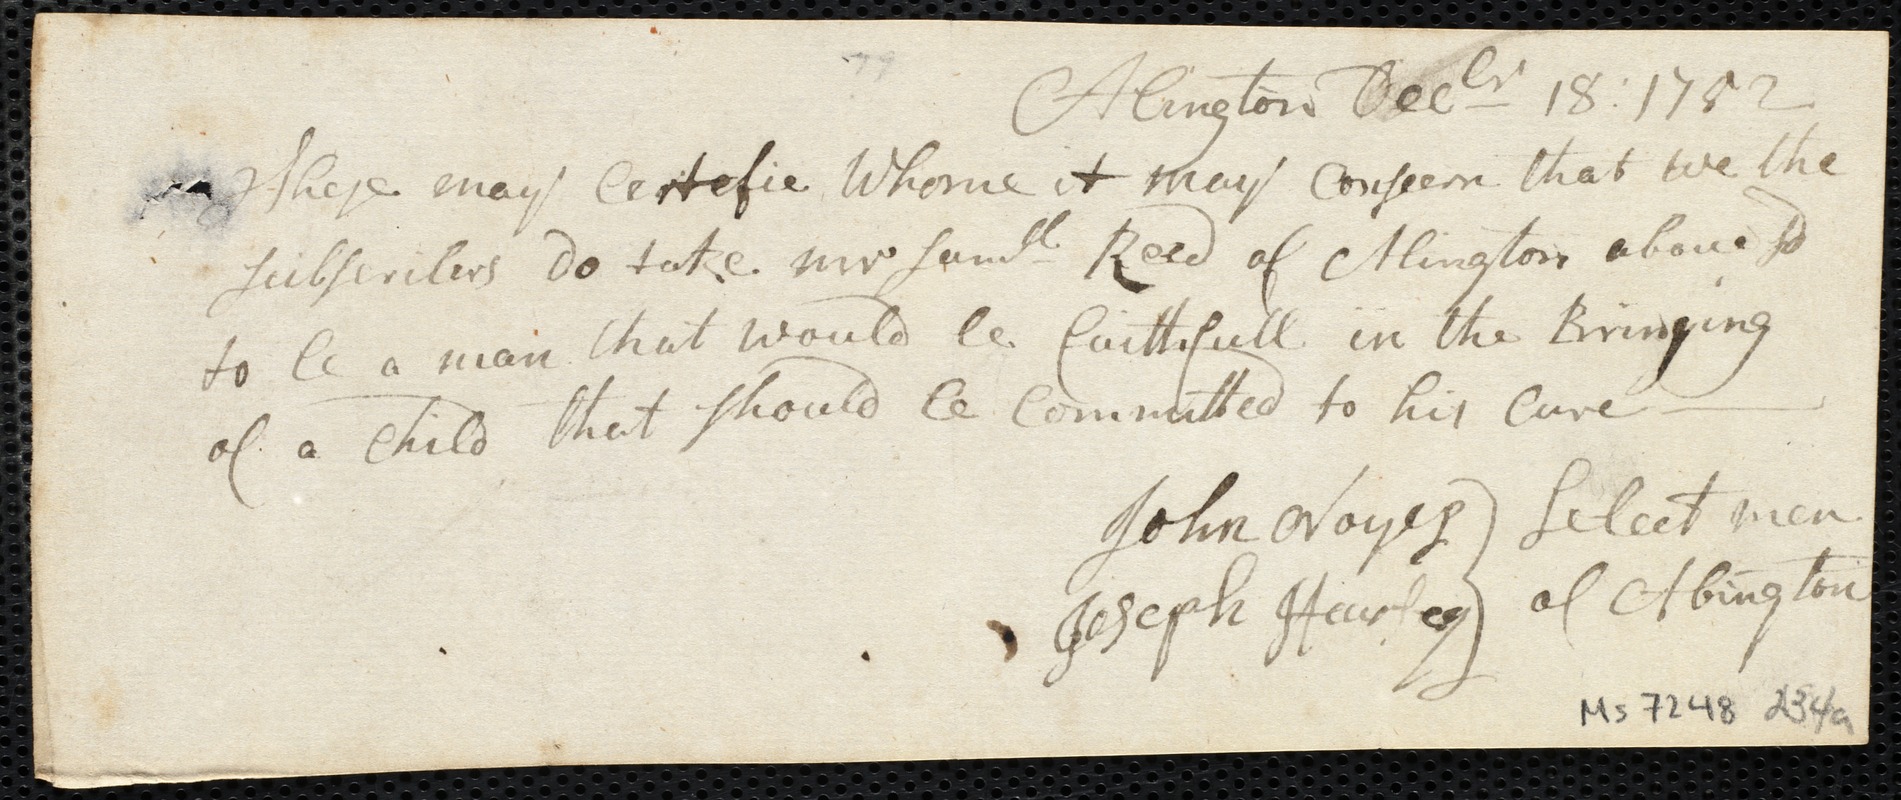 William Daniel indentured to apprentice with Samuel Read [Reed] of Abington, 28 December 1752